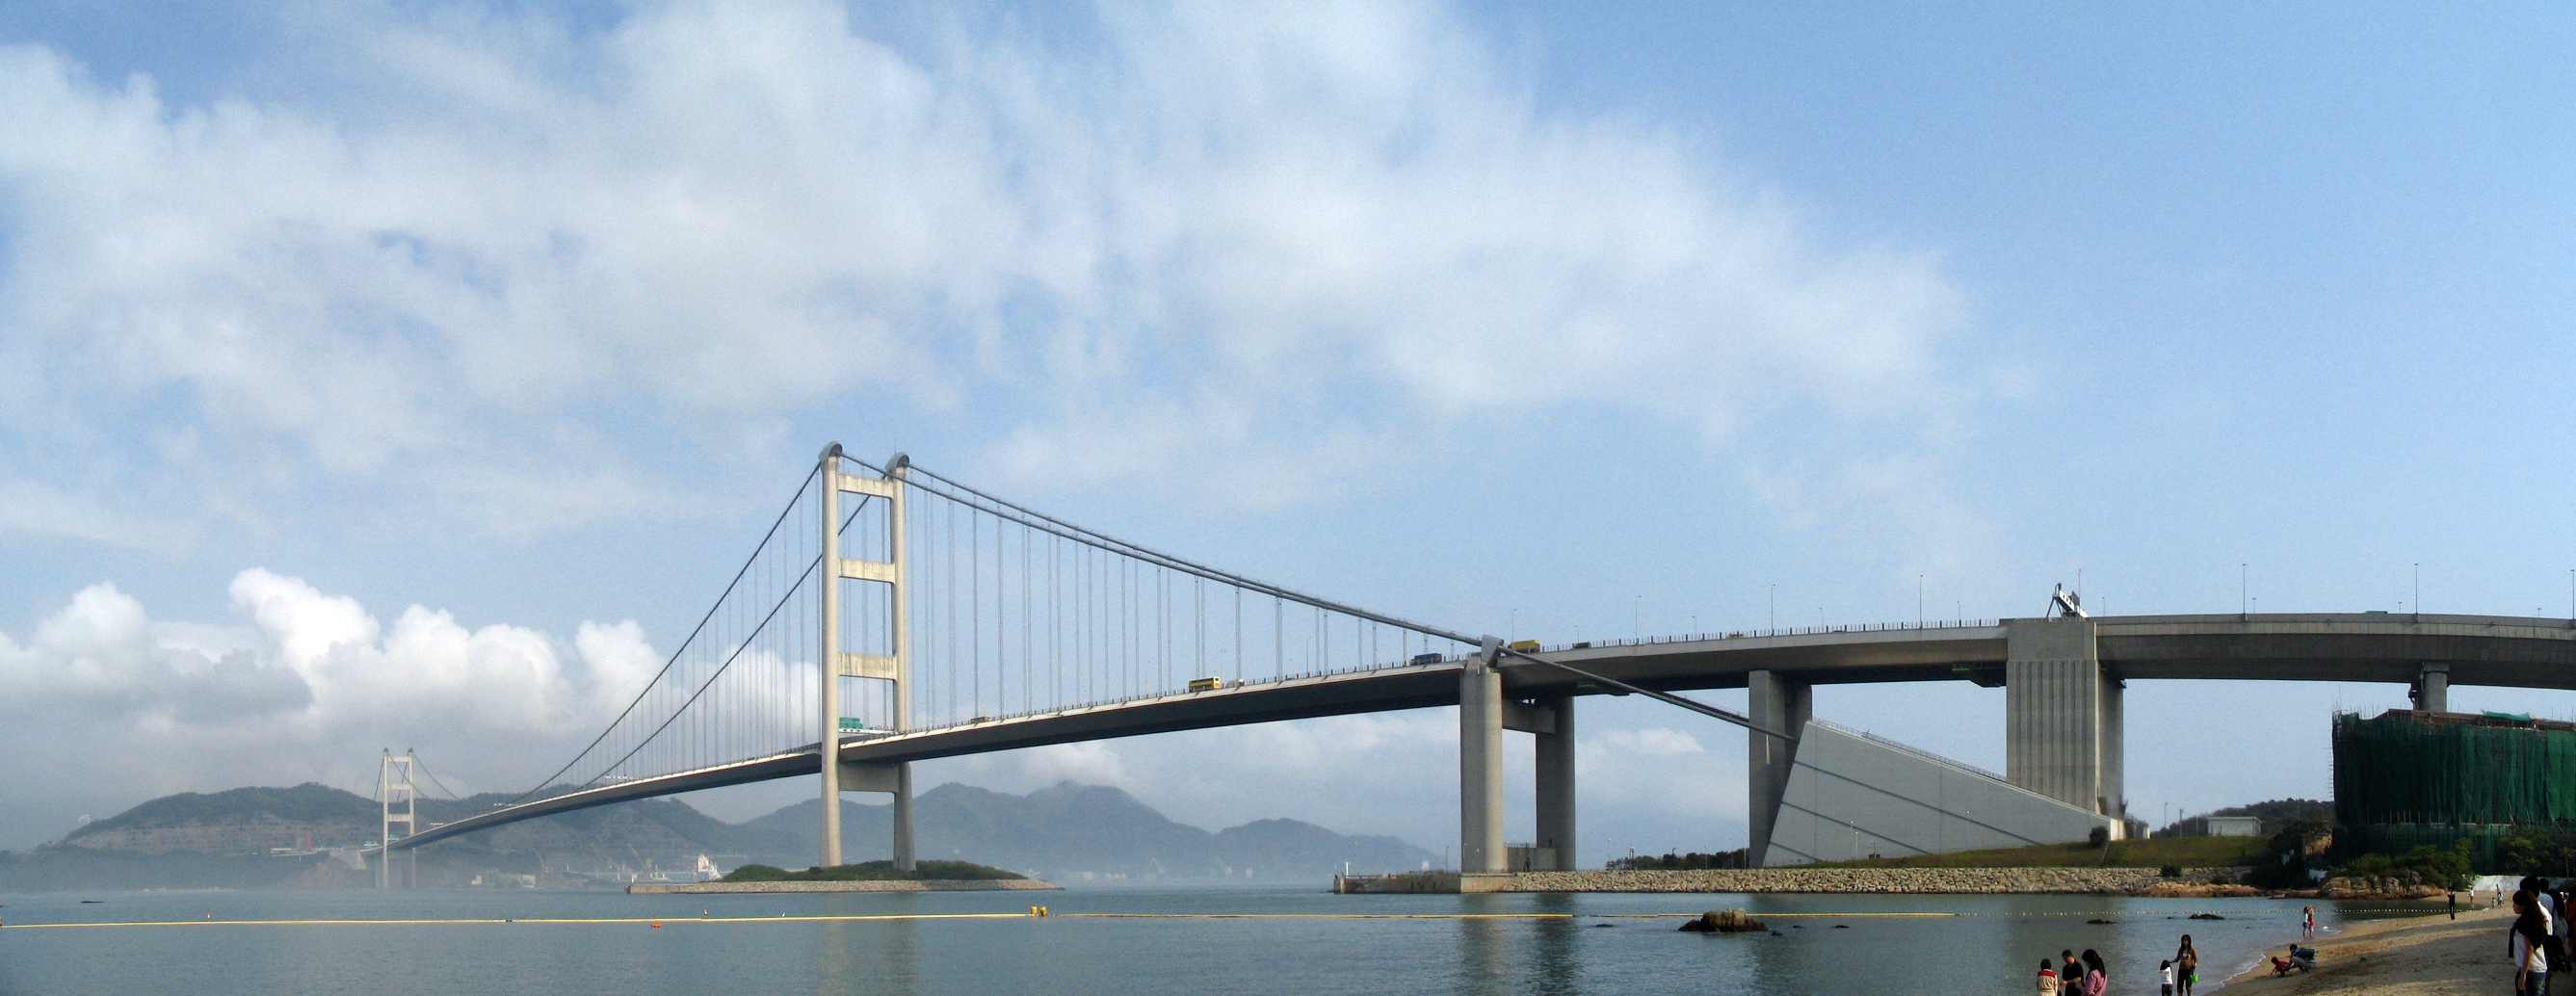 Amazing Tsing Ma Bridge Pictures & Backgrounds